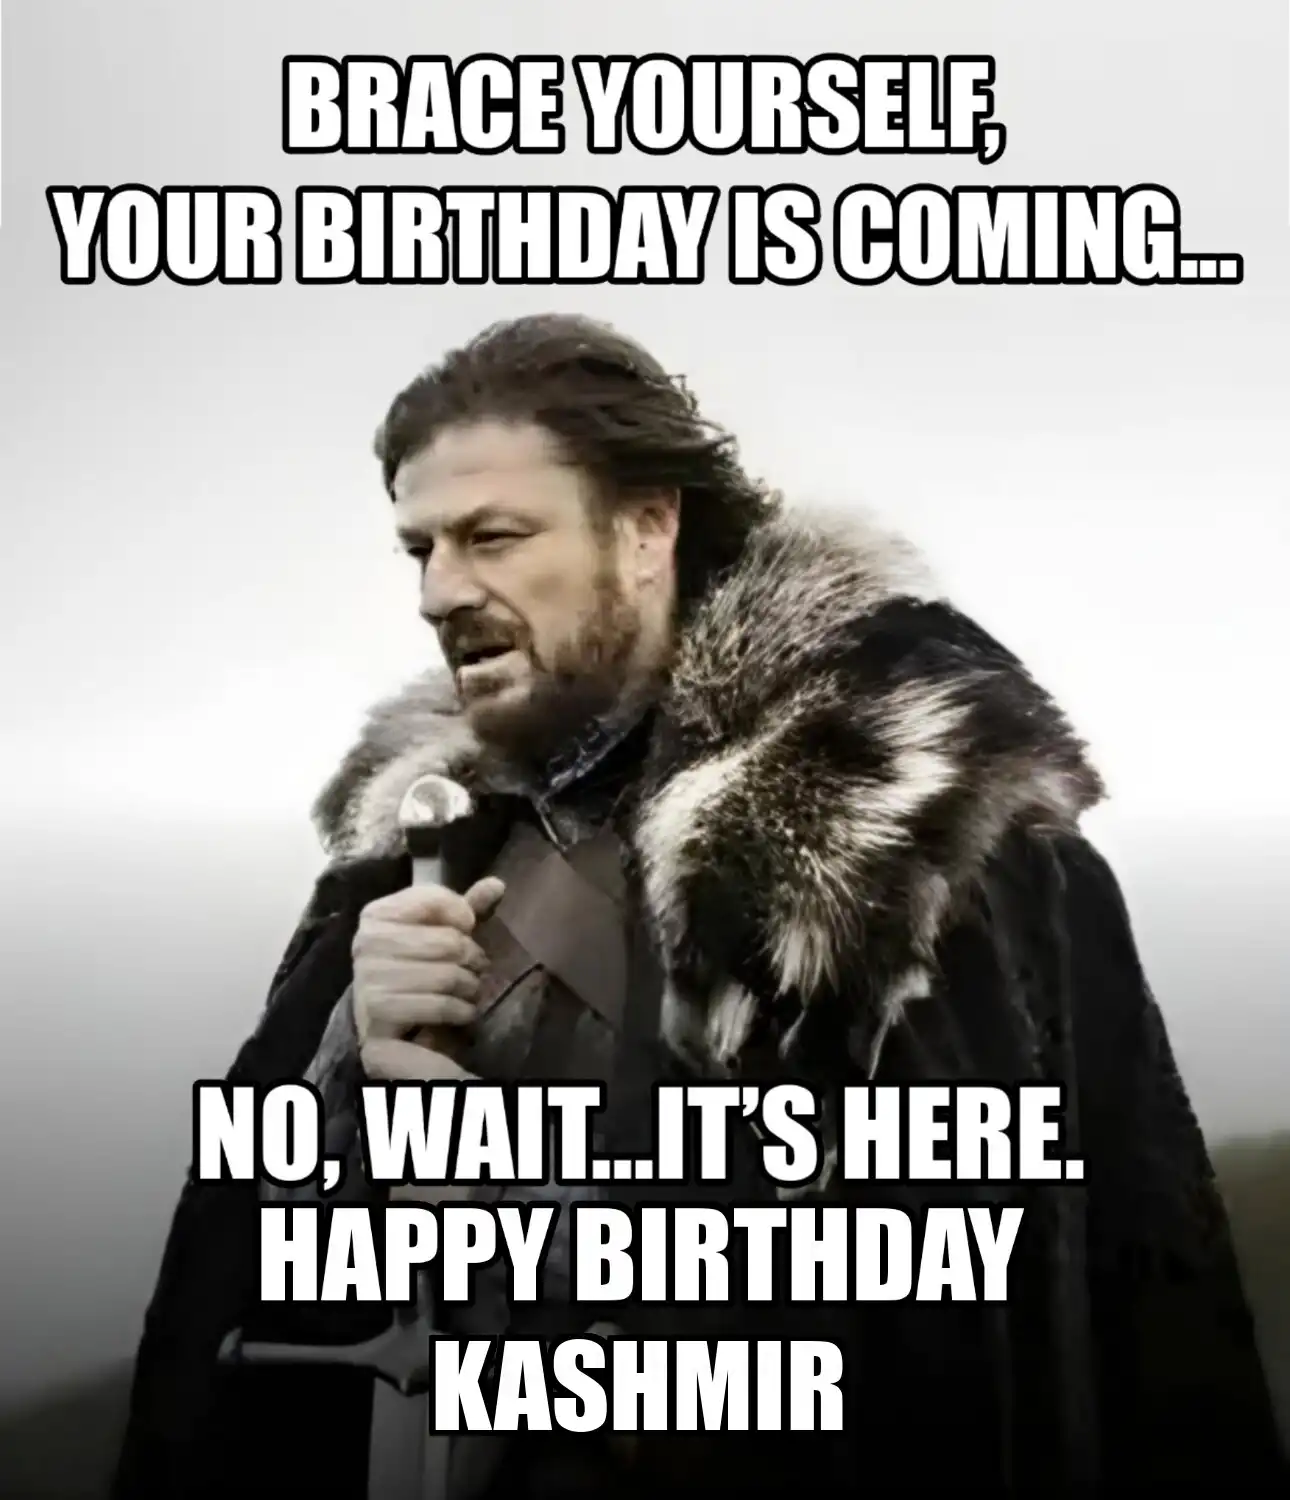 Happy Birthday Kashmir Brace Yourself Your Birthday Is Coming Meme